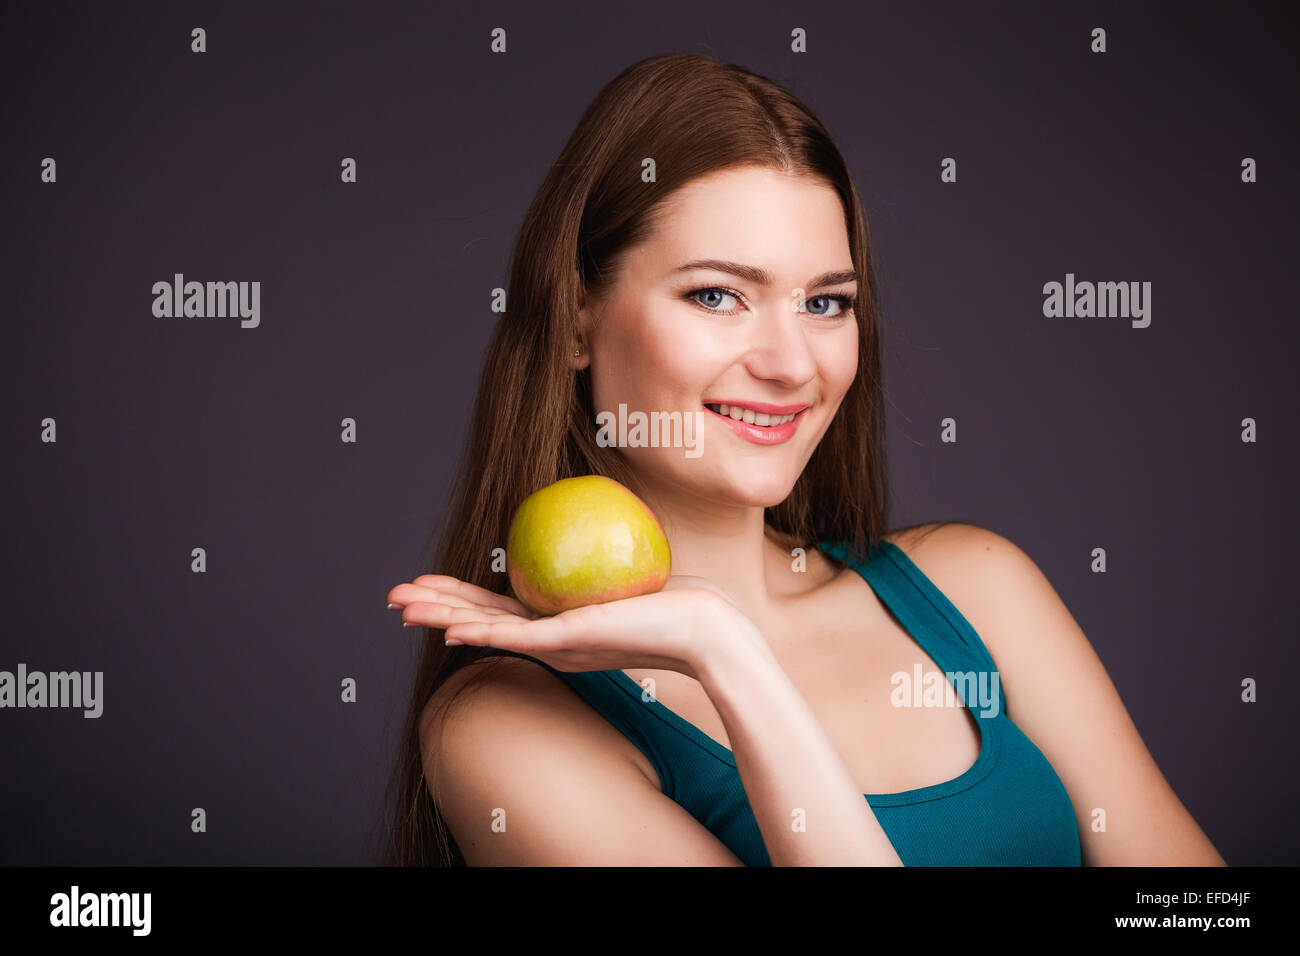 Woman holding apple Stock Photo